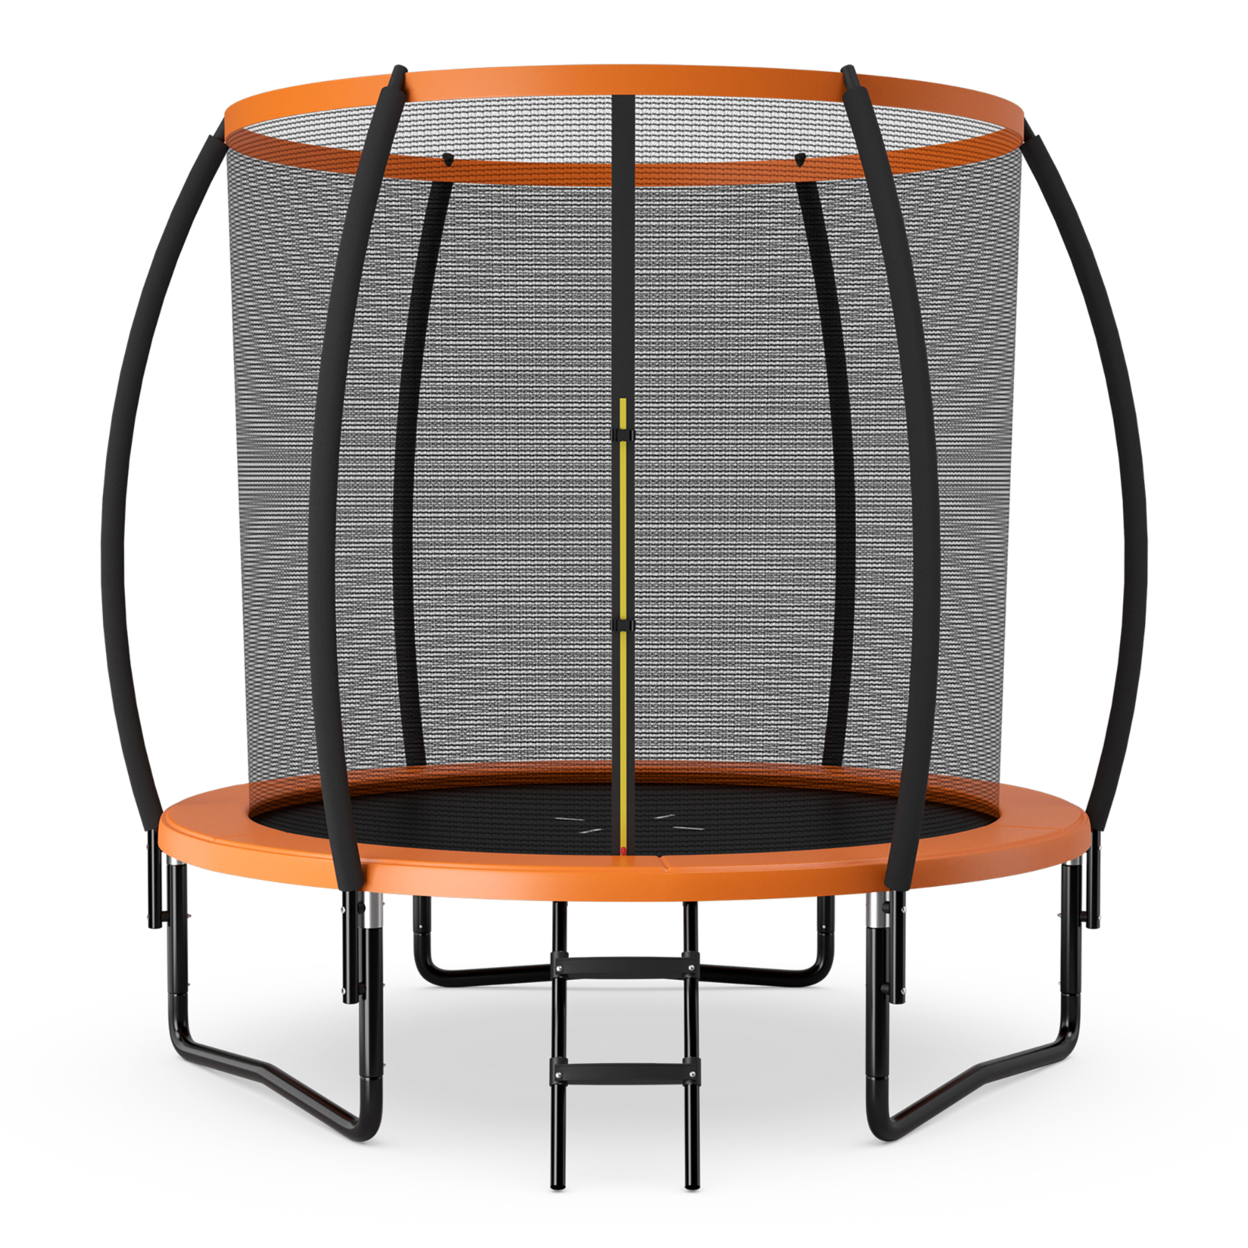 8FT Recreational Trampoline W/ Ladder Enclosure Net Safety Pad Outdoor - Orange